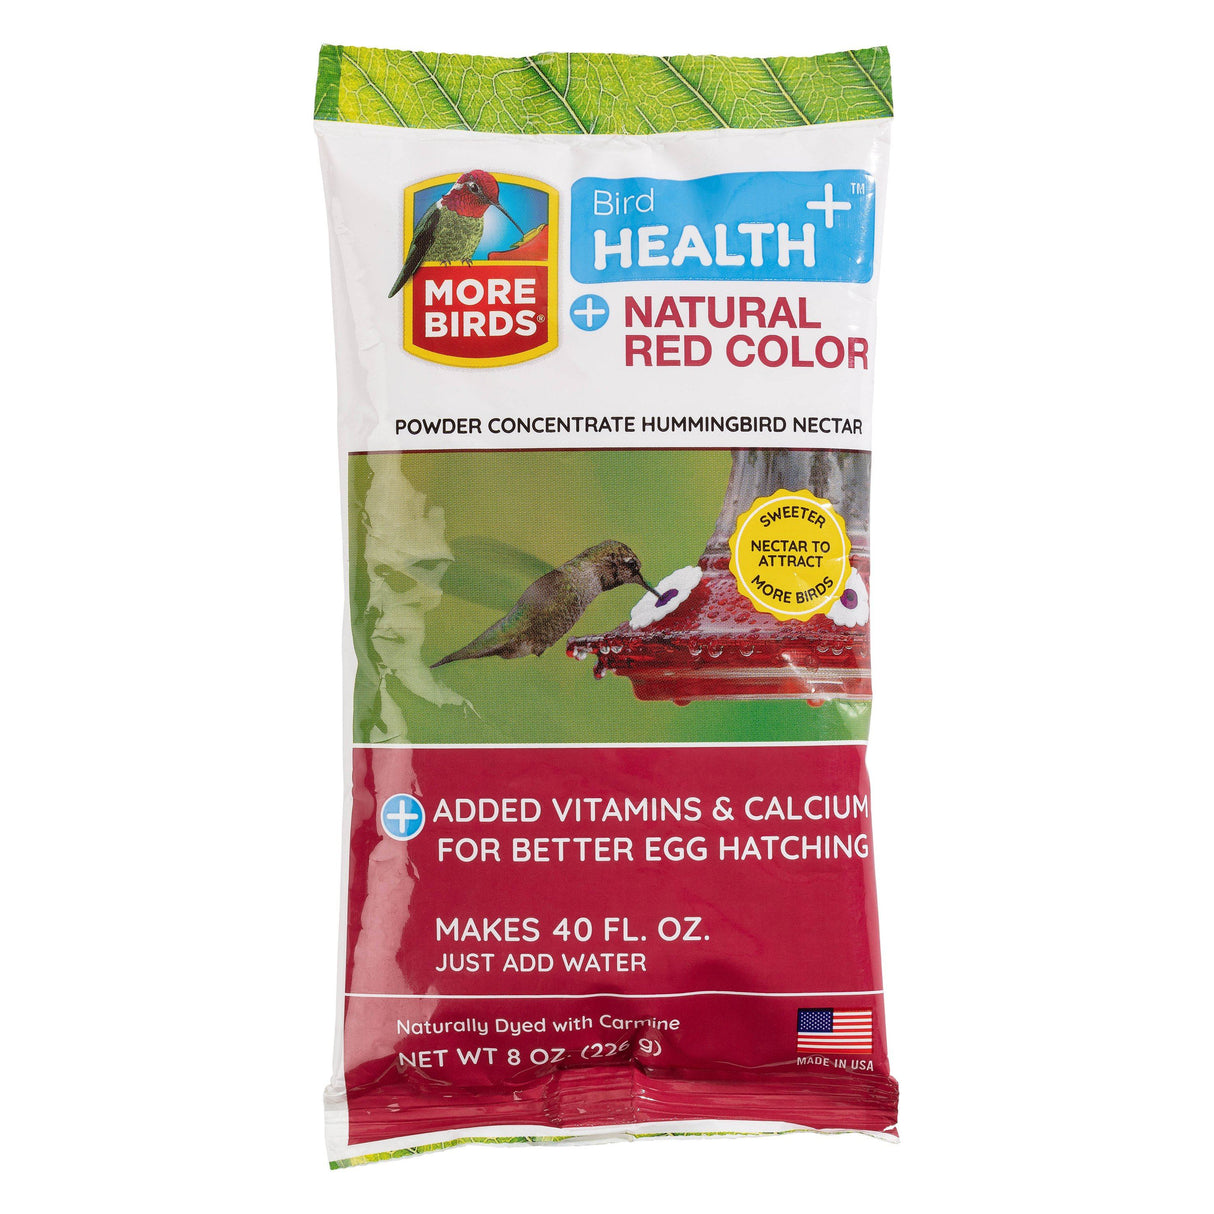 More Birds Health Plus Natural Red Hummingbird Nectar Powder Concentrate - PetMountain.com